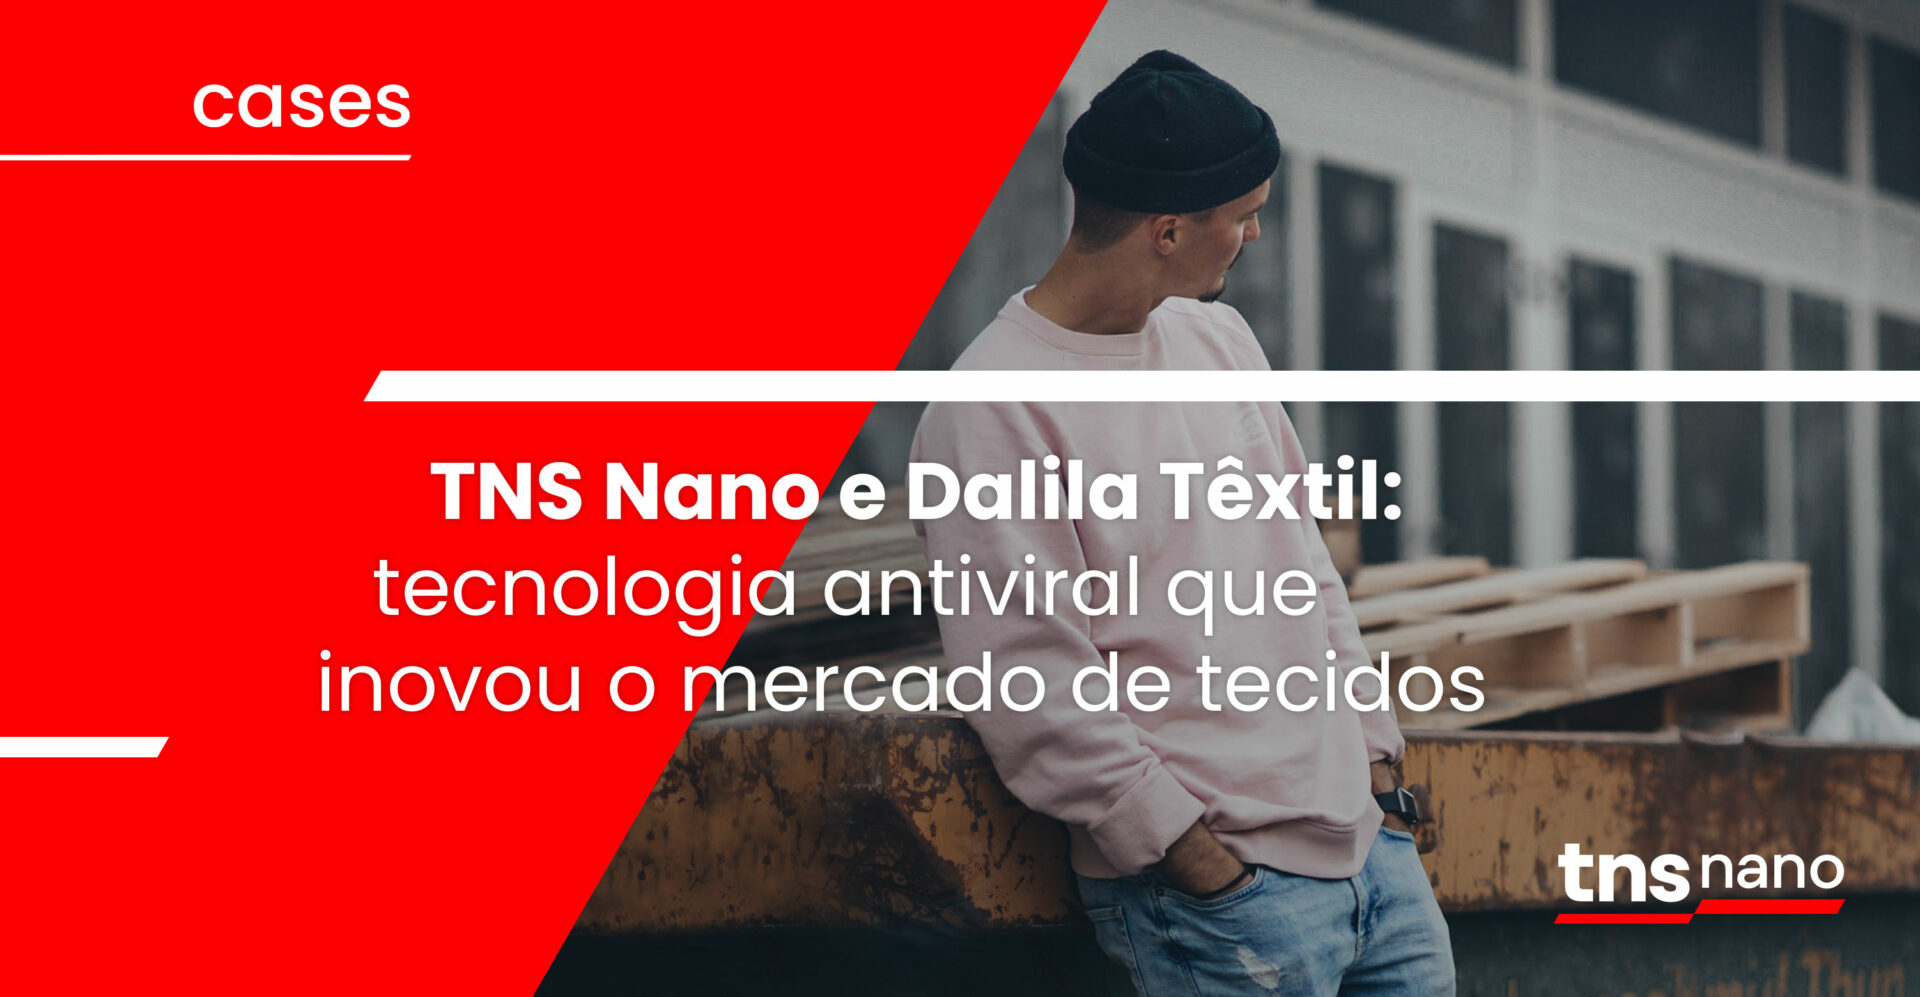 [TNS Nano] Dalila têxtil